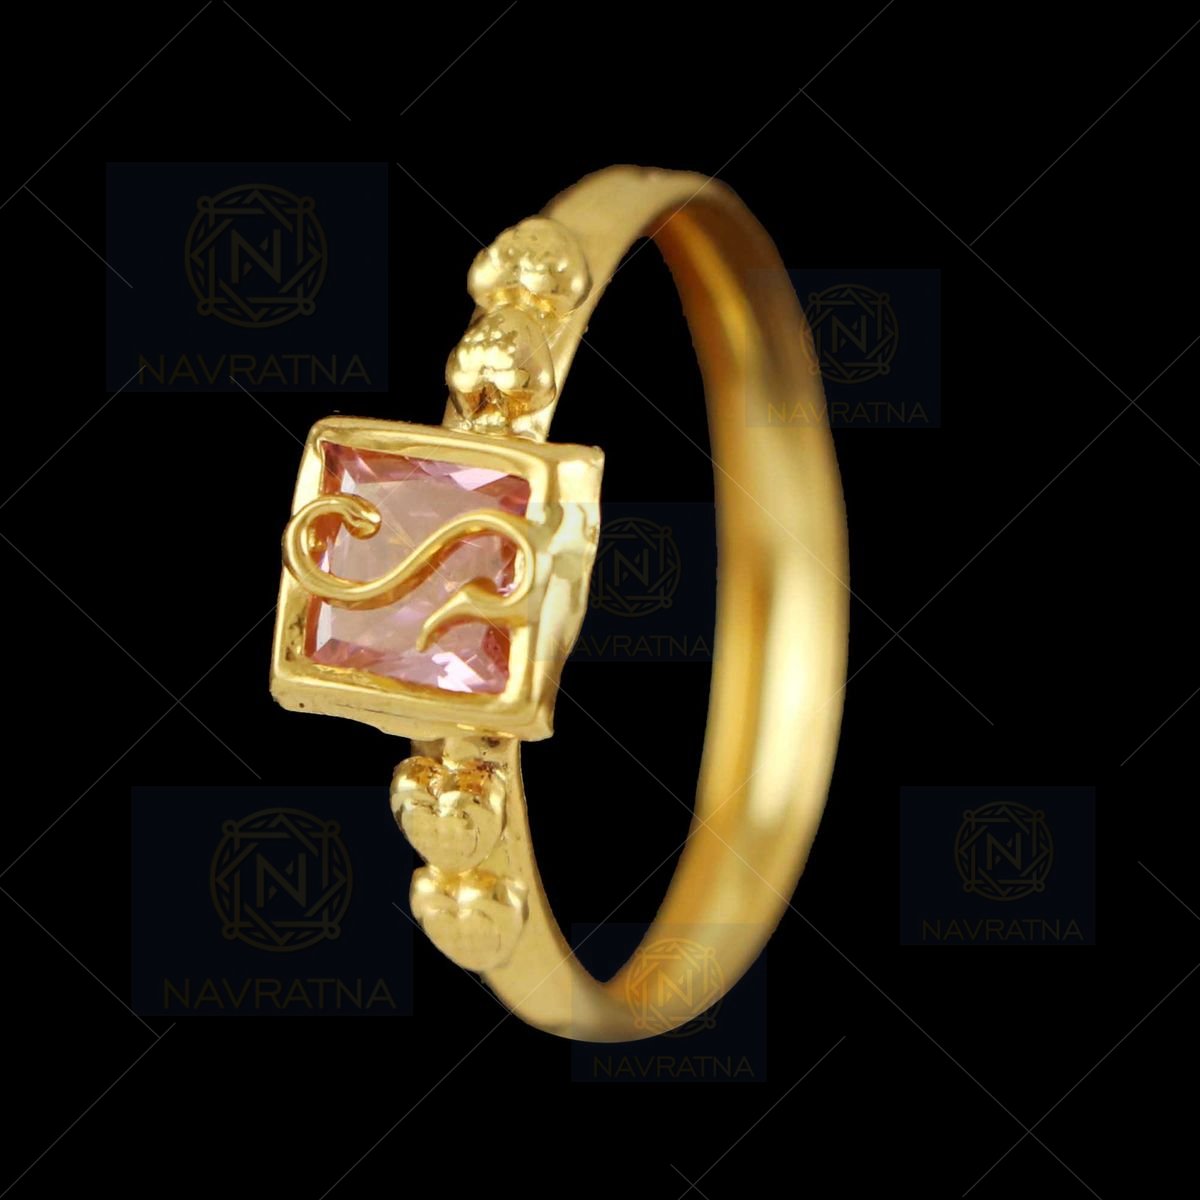 Rosebud Ring | Jewelry knowledge, Jewelry, Gold